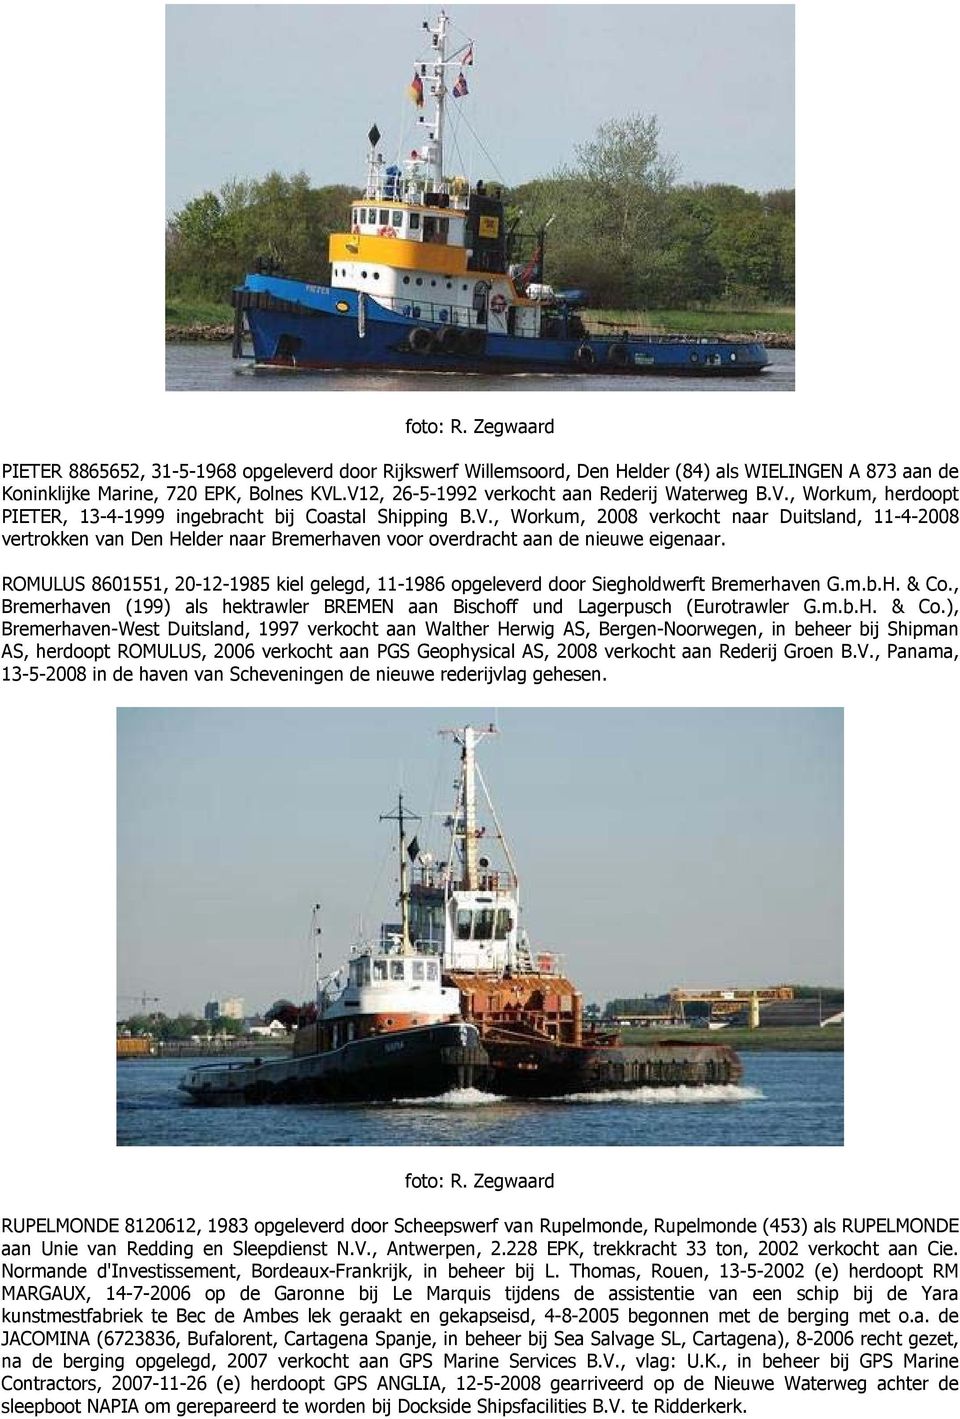 ROMULUS 8601551, 20-12-1985 kiel gelegd, 11-1986 opgeleverd door Siegholdwerft Bremerhaven G.m.b.H. & Co.